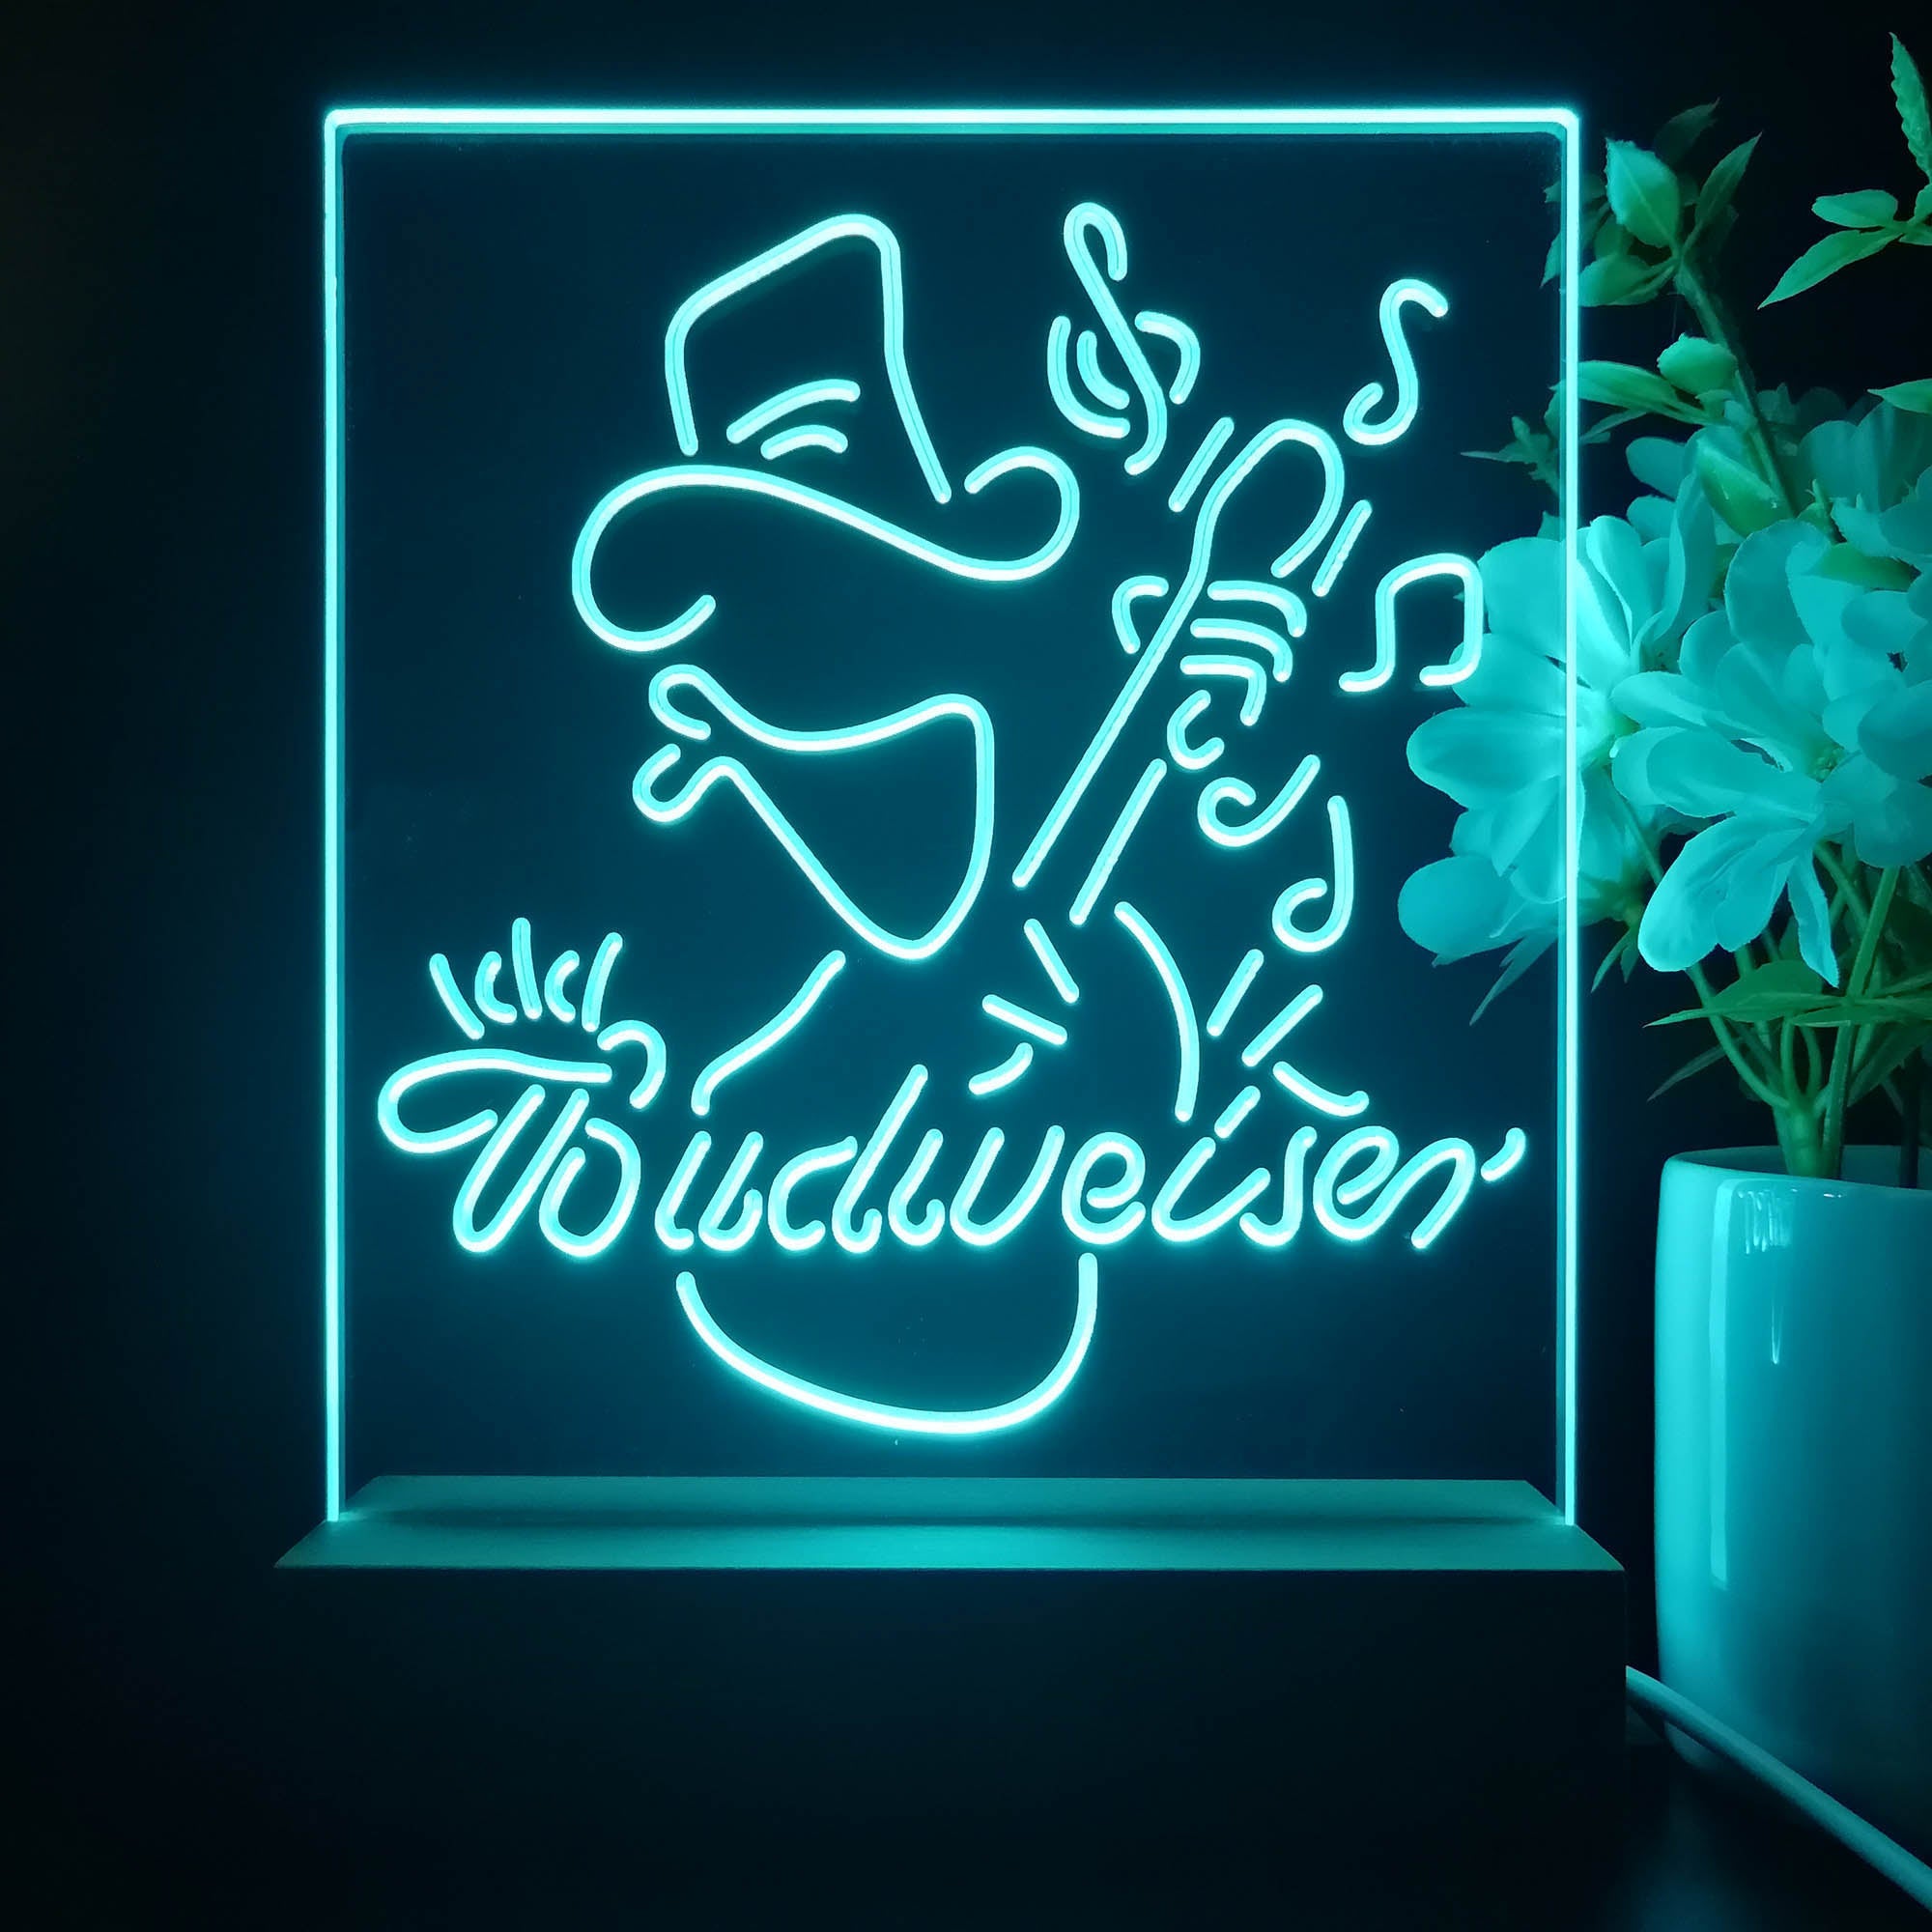 Budweiser Cowboy Play Guitar Night Light Neon Pub Bar Lamp